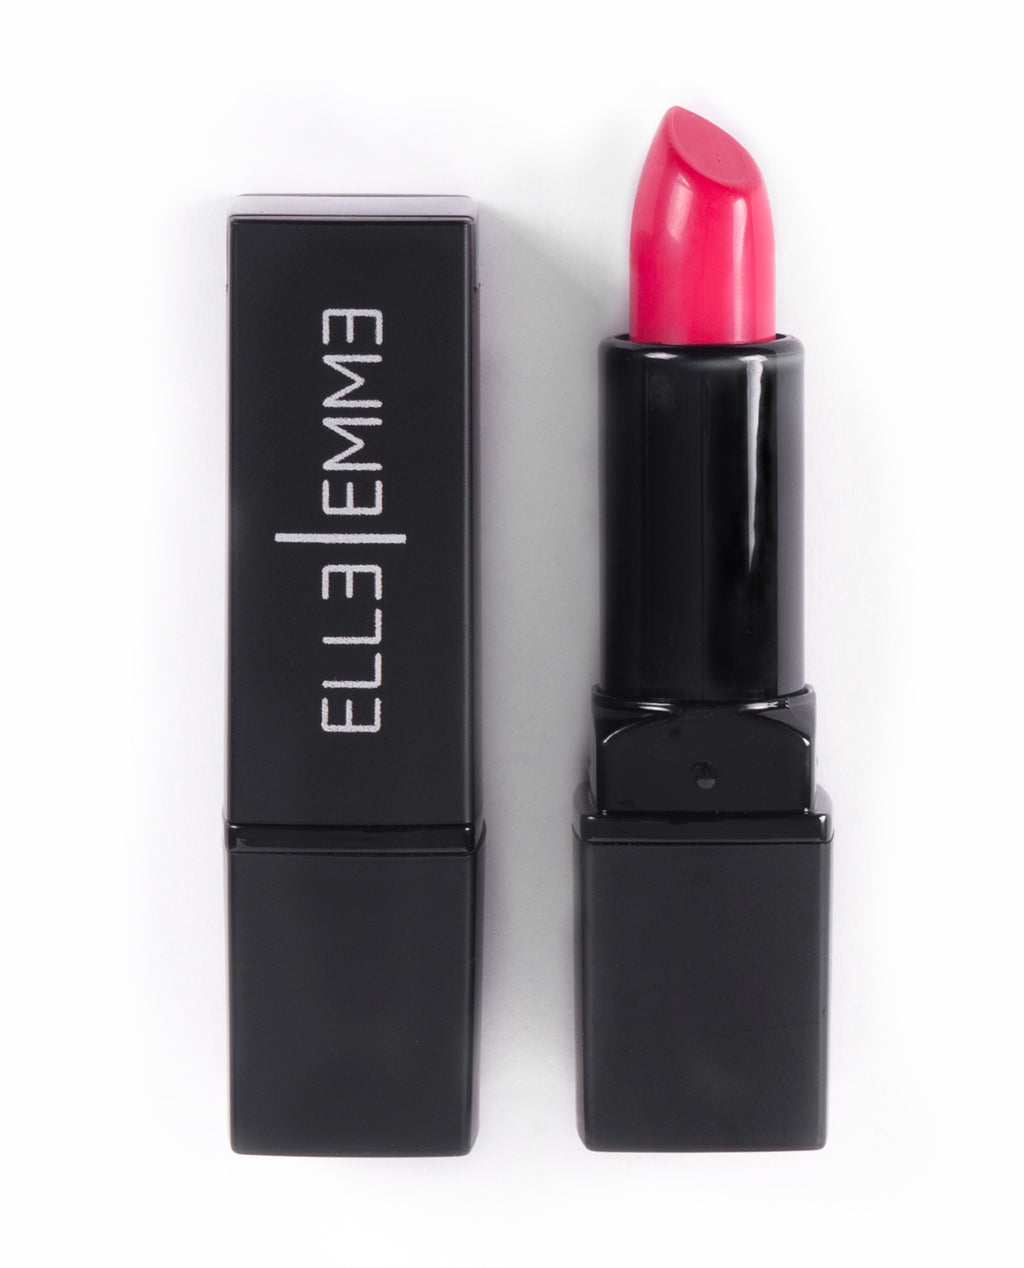 Pinky red lipstick